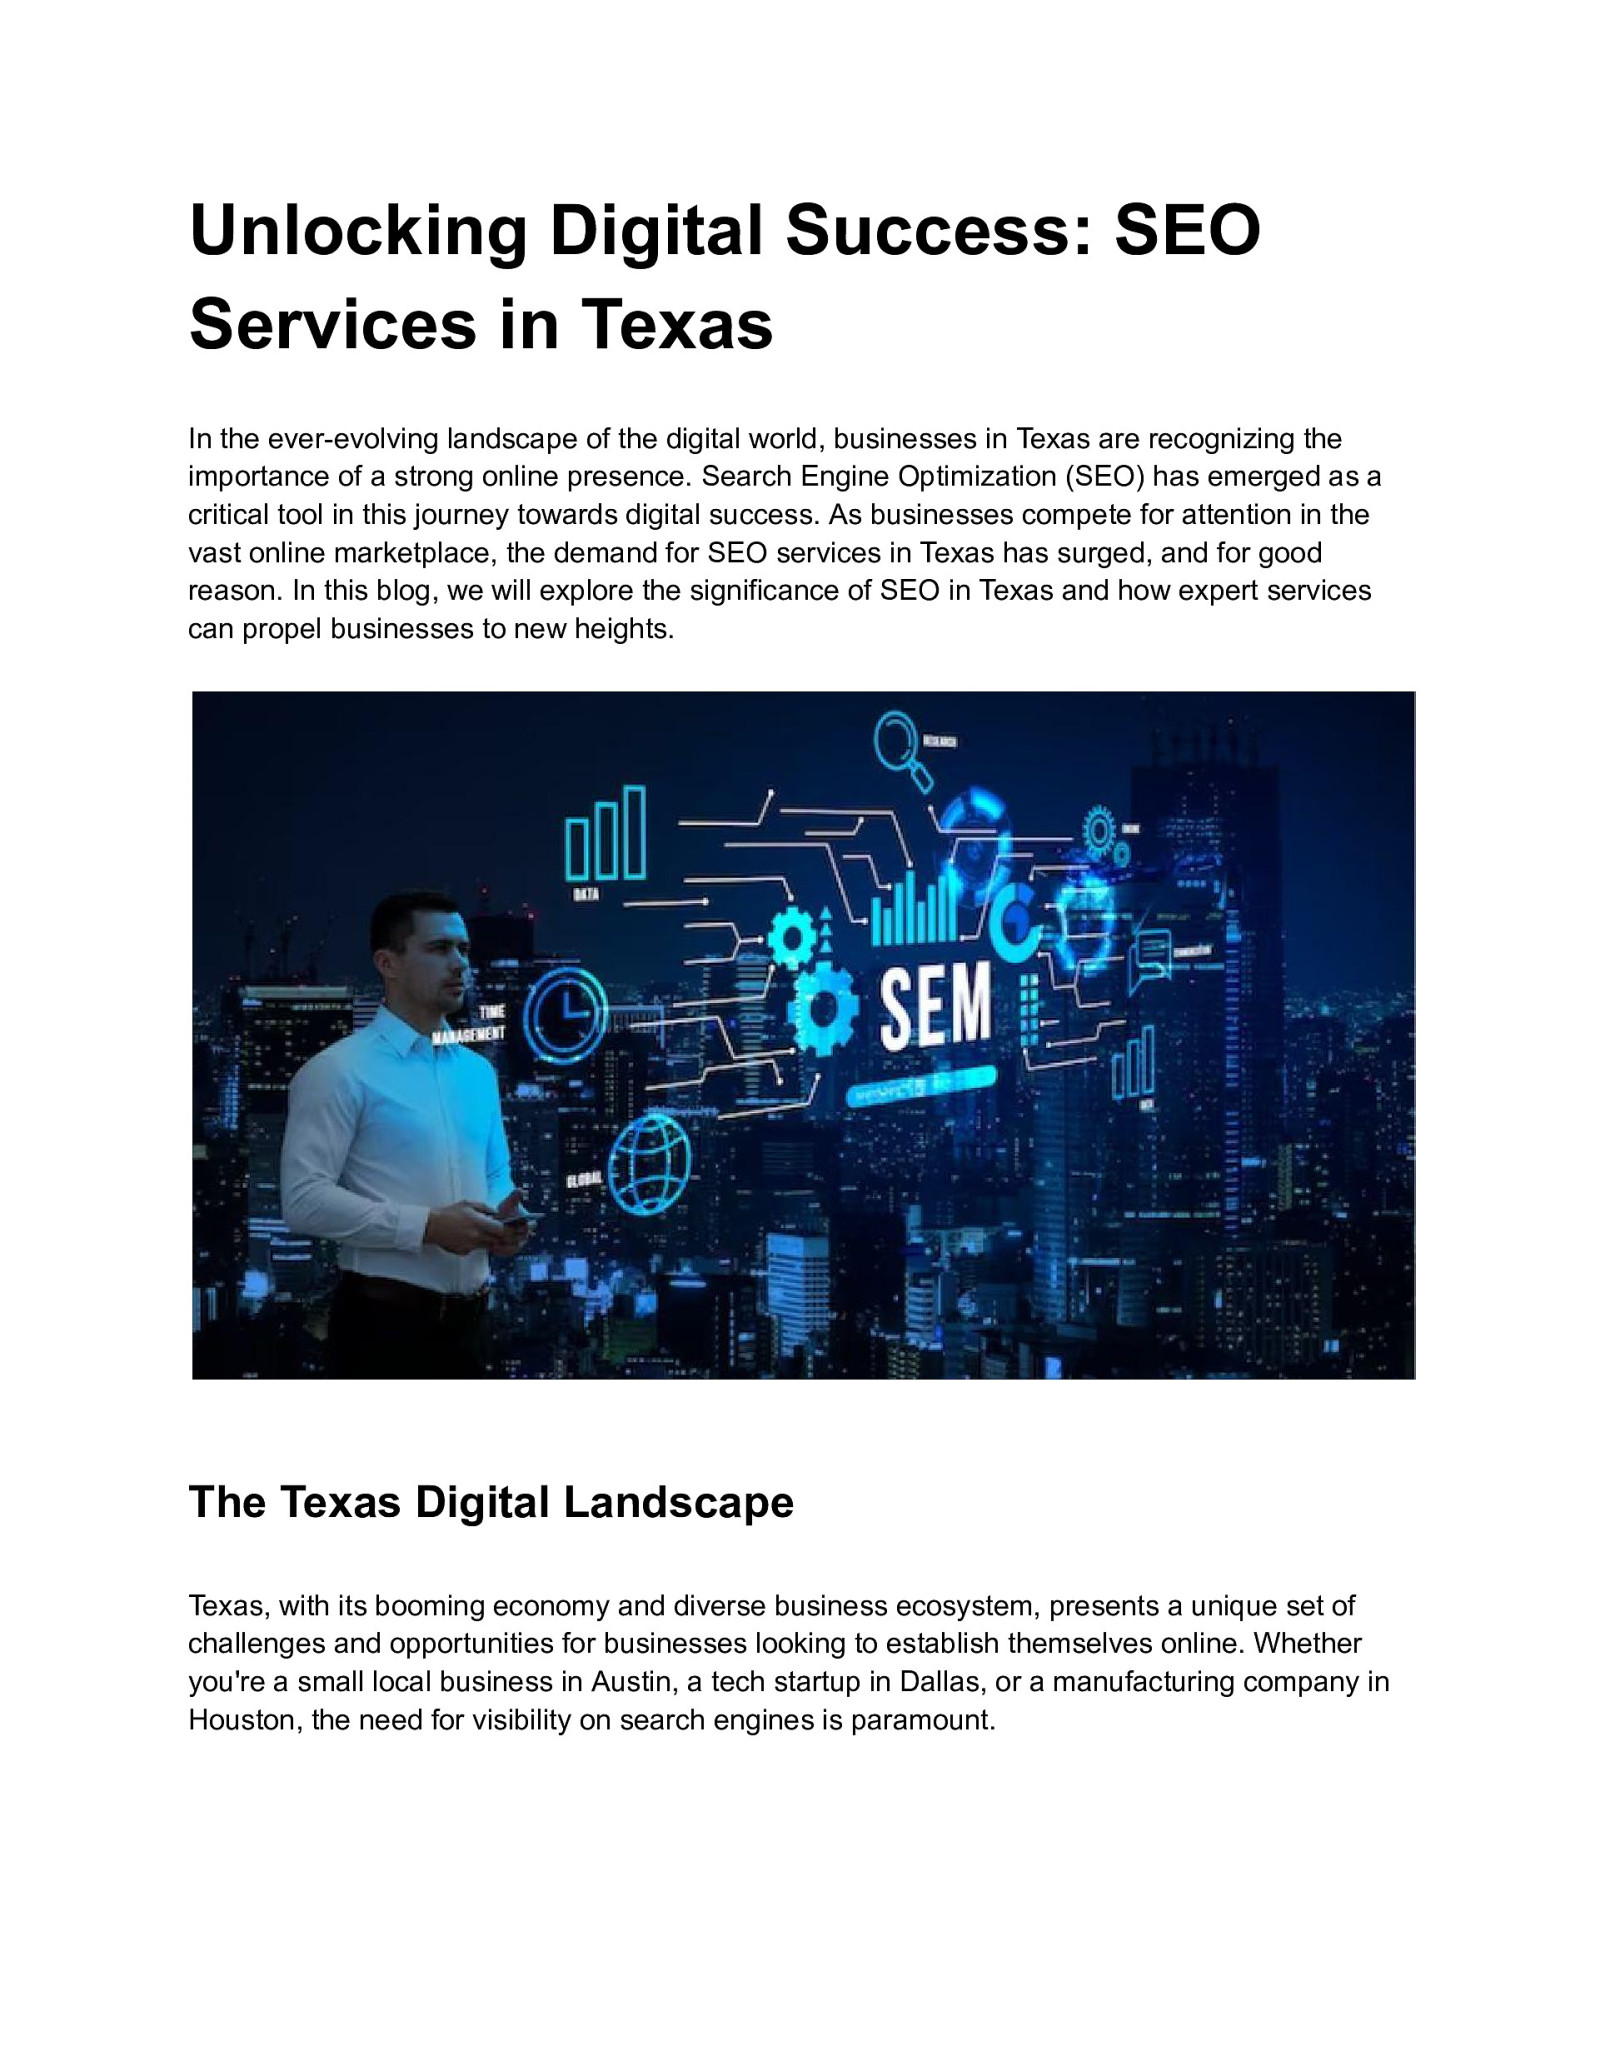 SEO Service in Texas